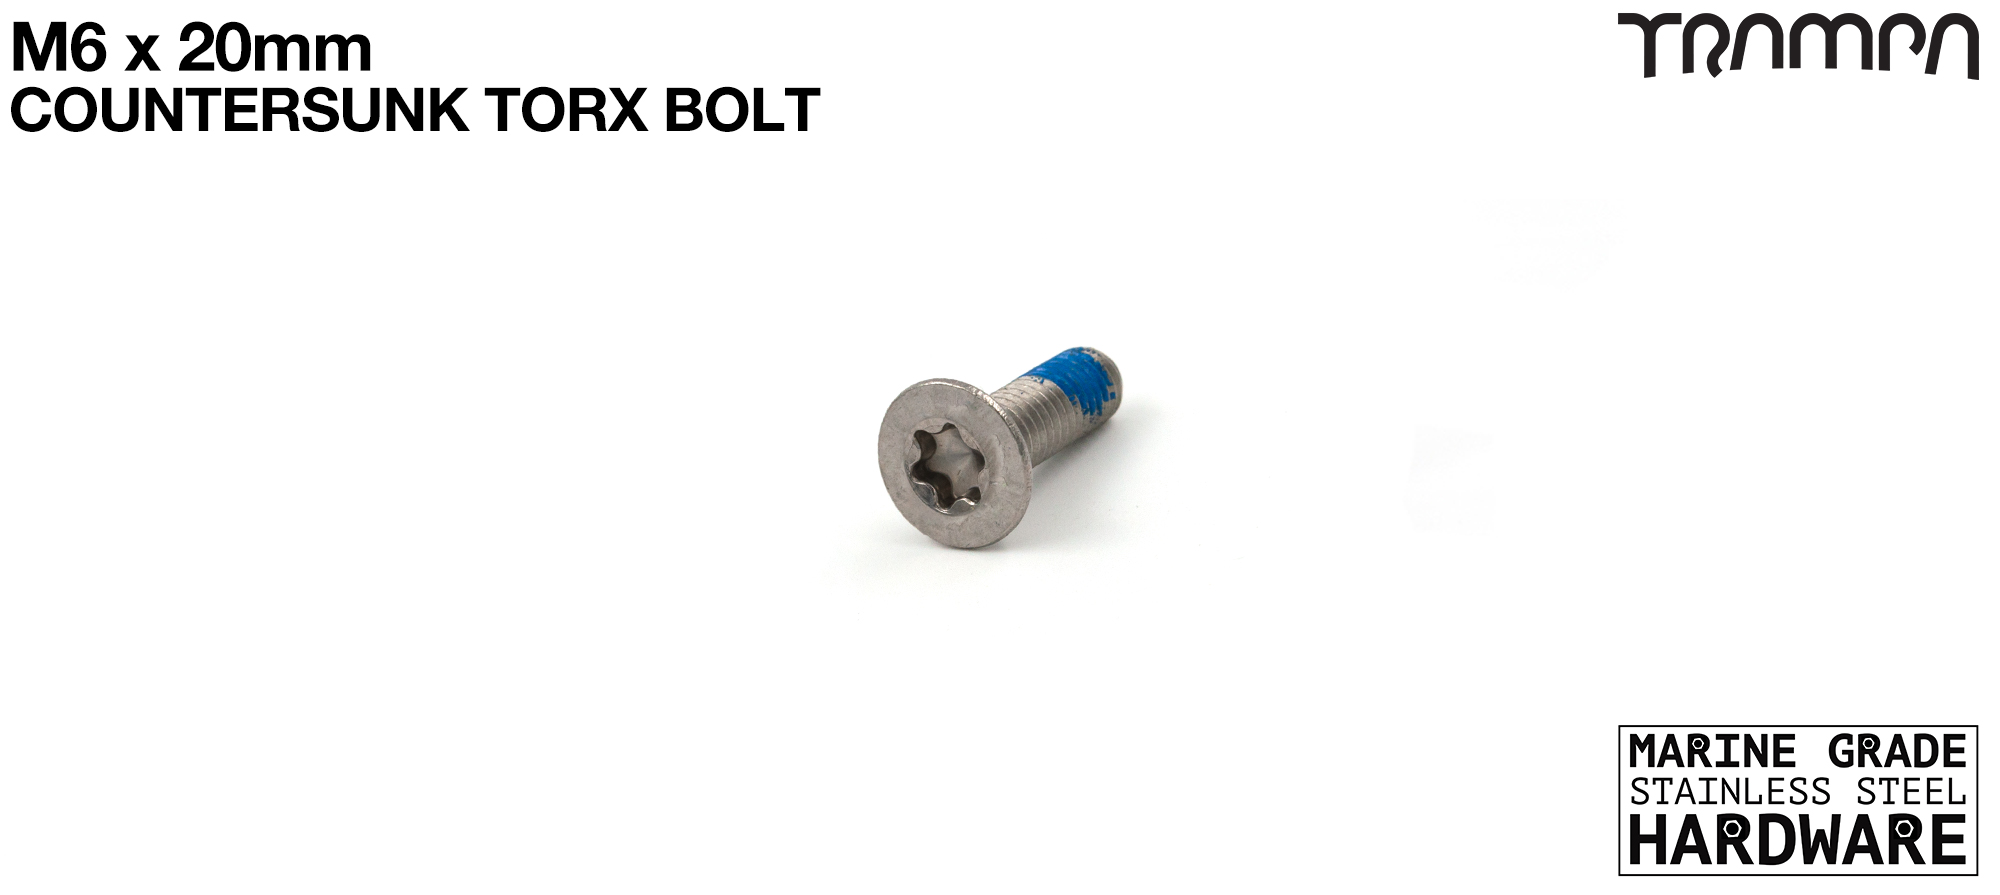 M6 x 20mm Countersunk TORX Bolt - Marine Grade Stainless steel with locking paste